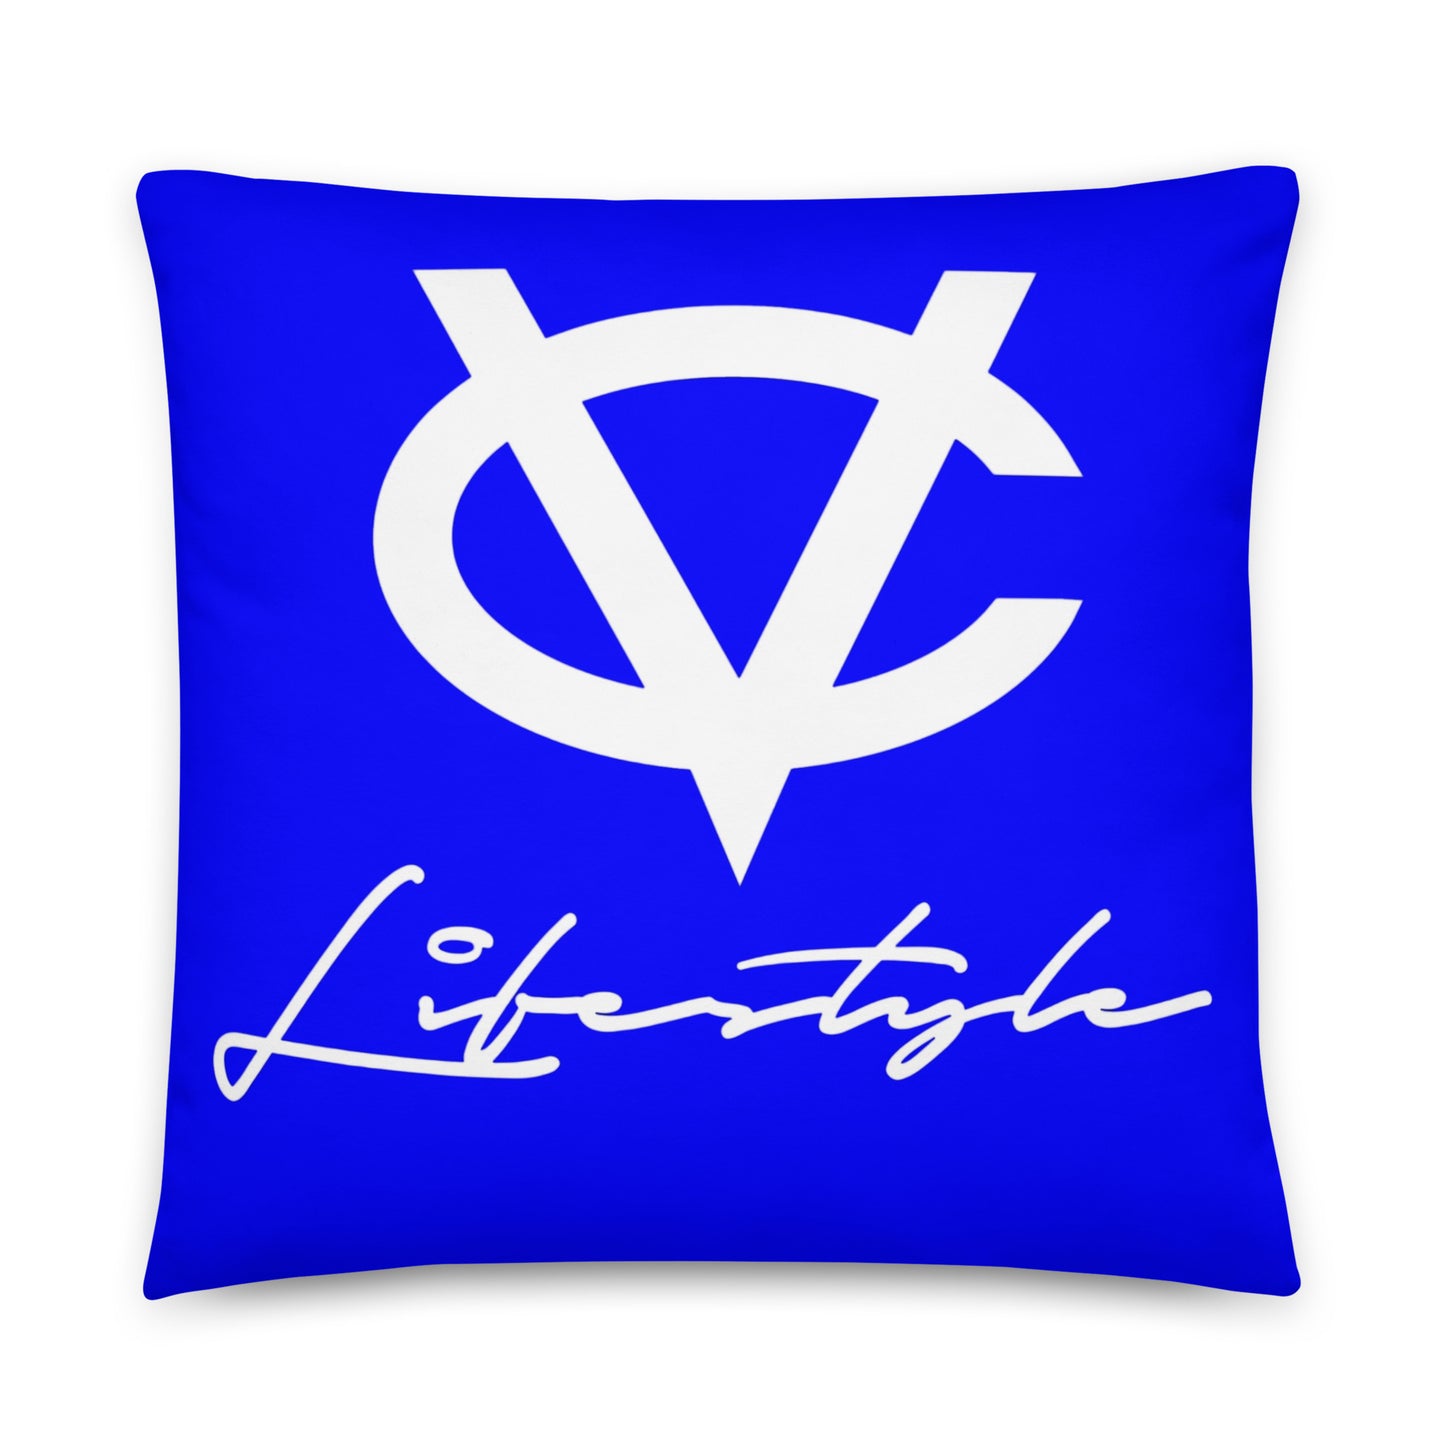 CvLs Basic Pillow